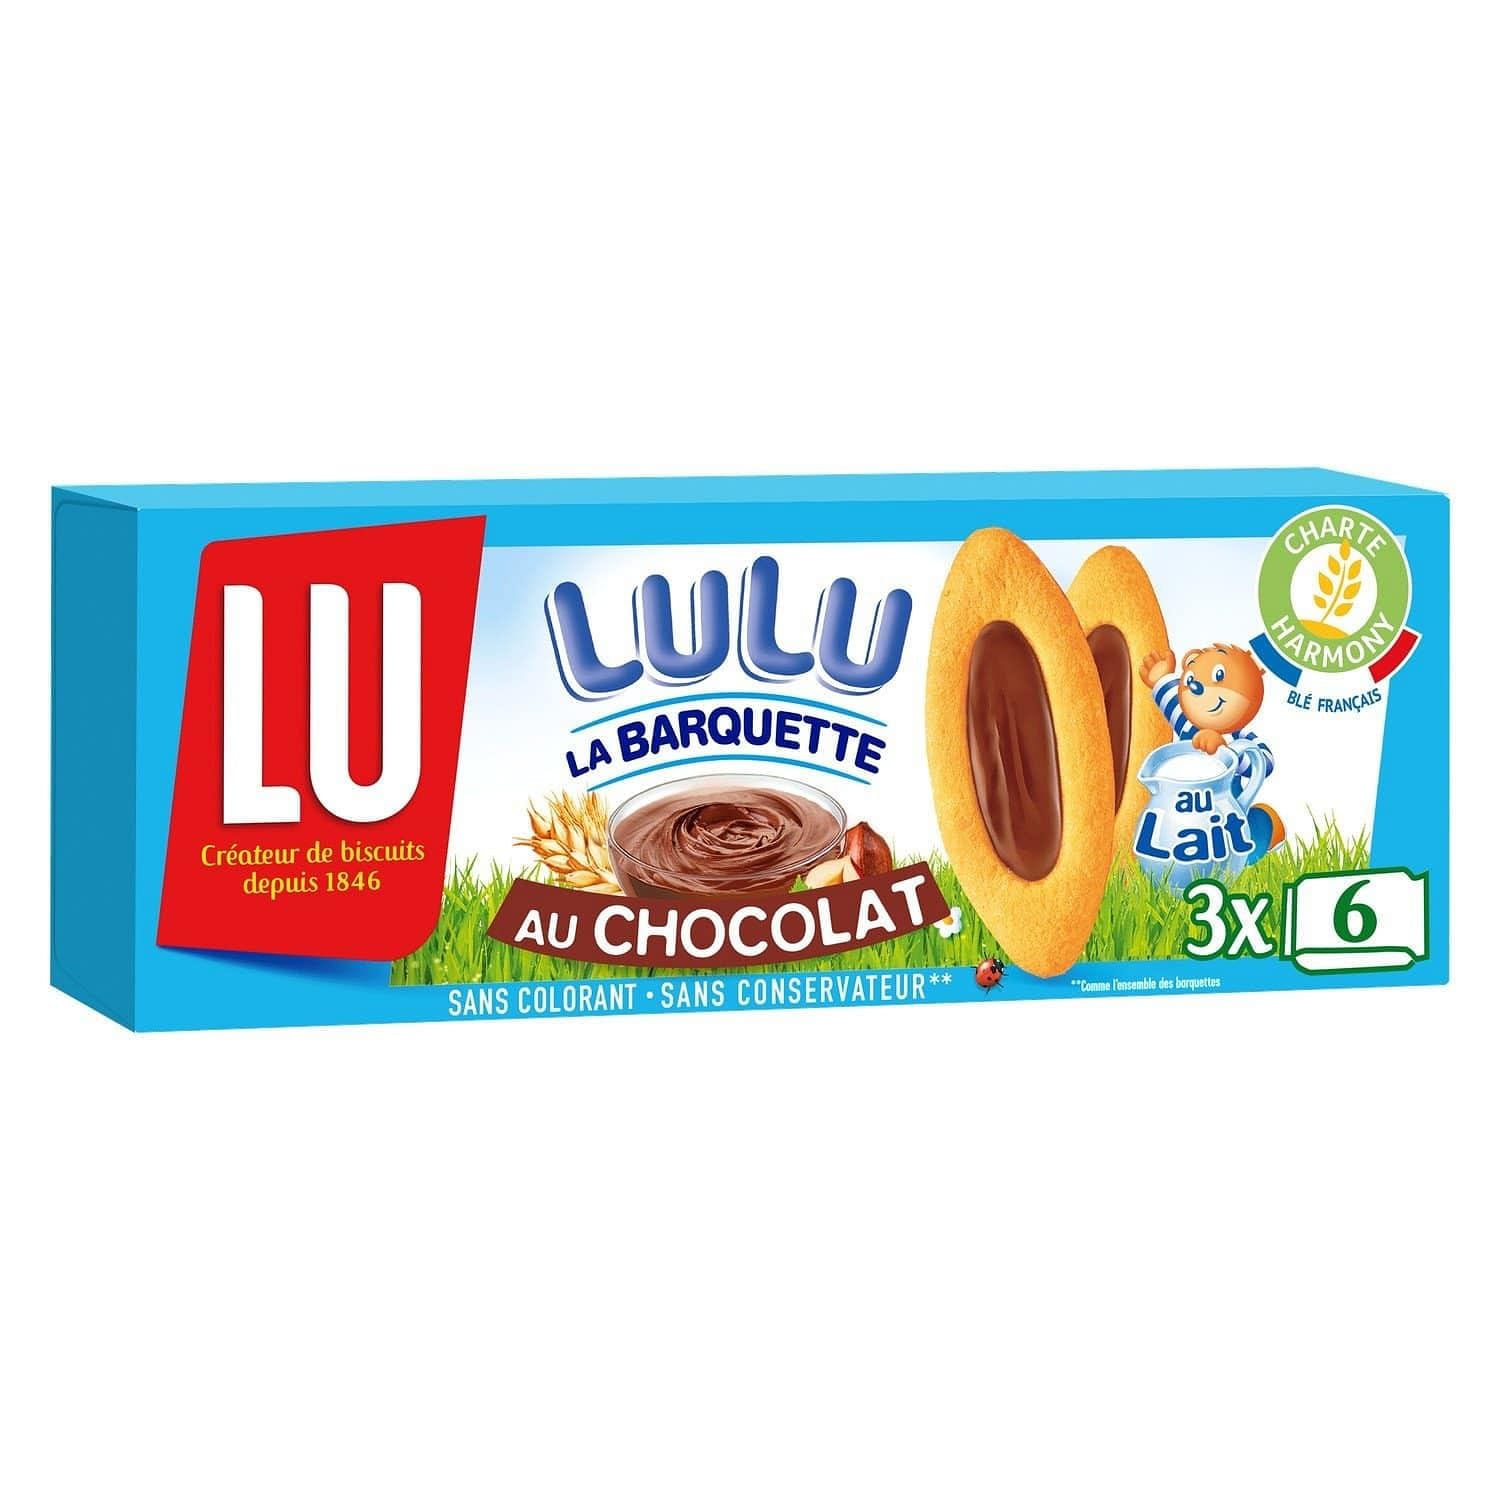 Lu Lulu la barquette chocolat lu - En promotion chez Netto